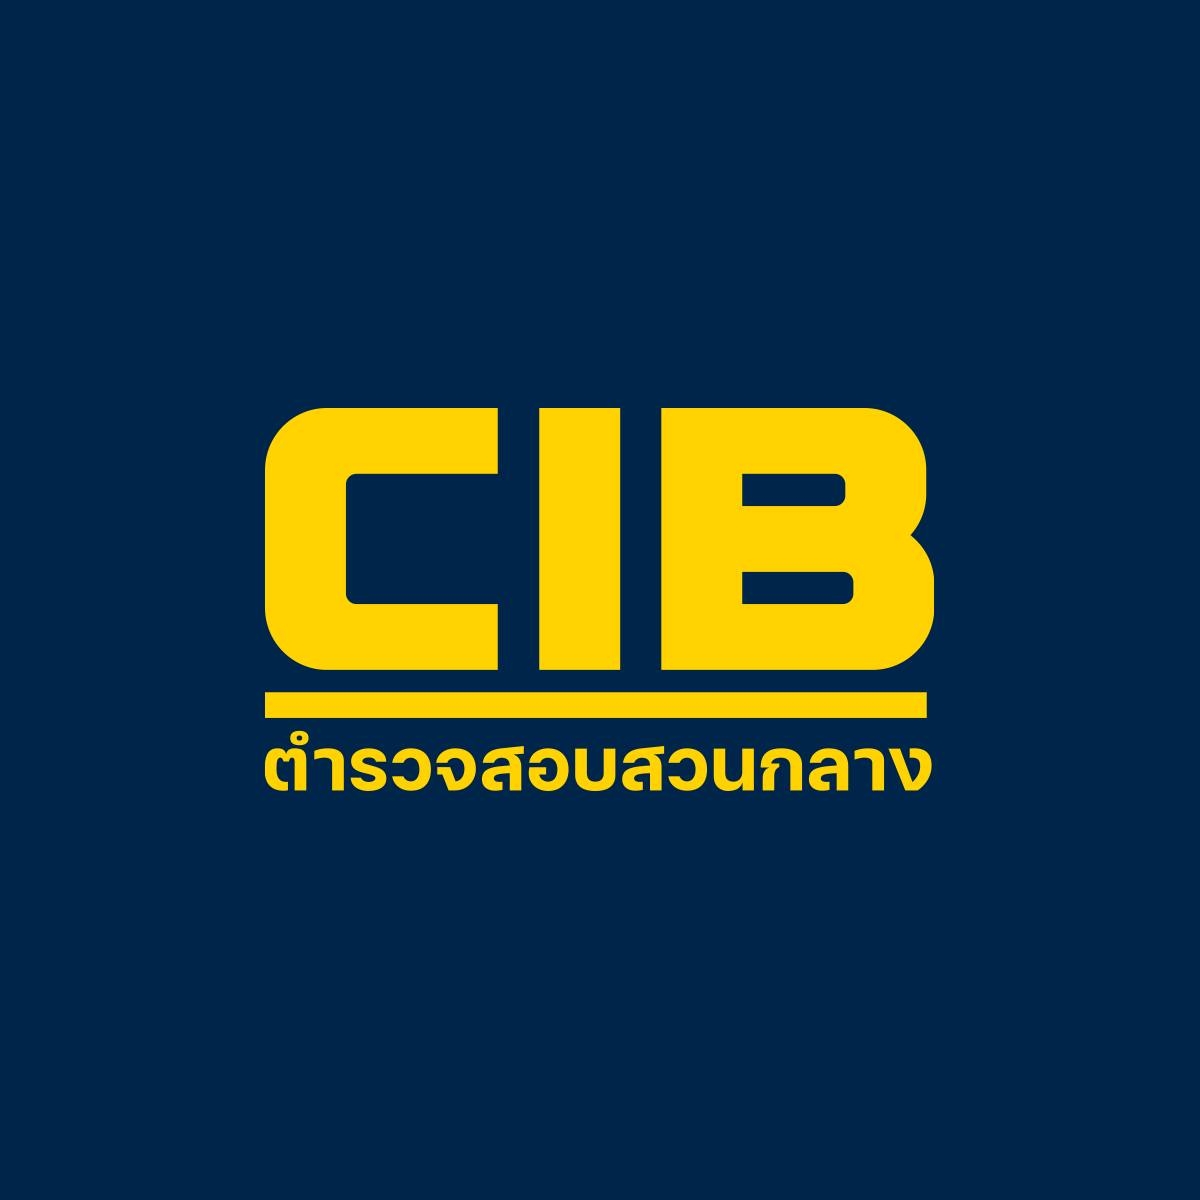 Central Investigation Police Thailand (CIB) Central Investigation Bureau.